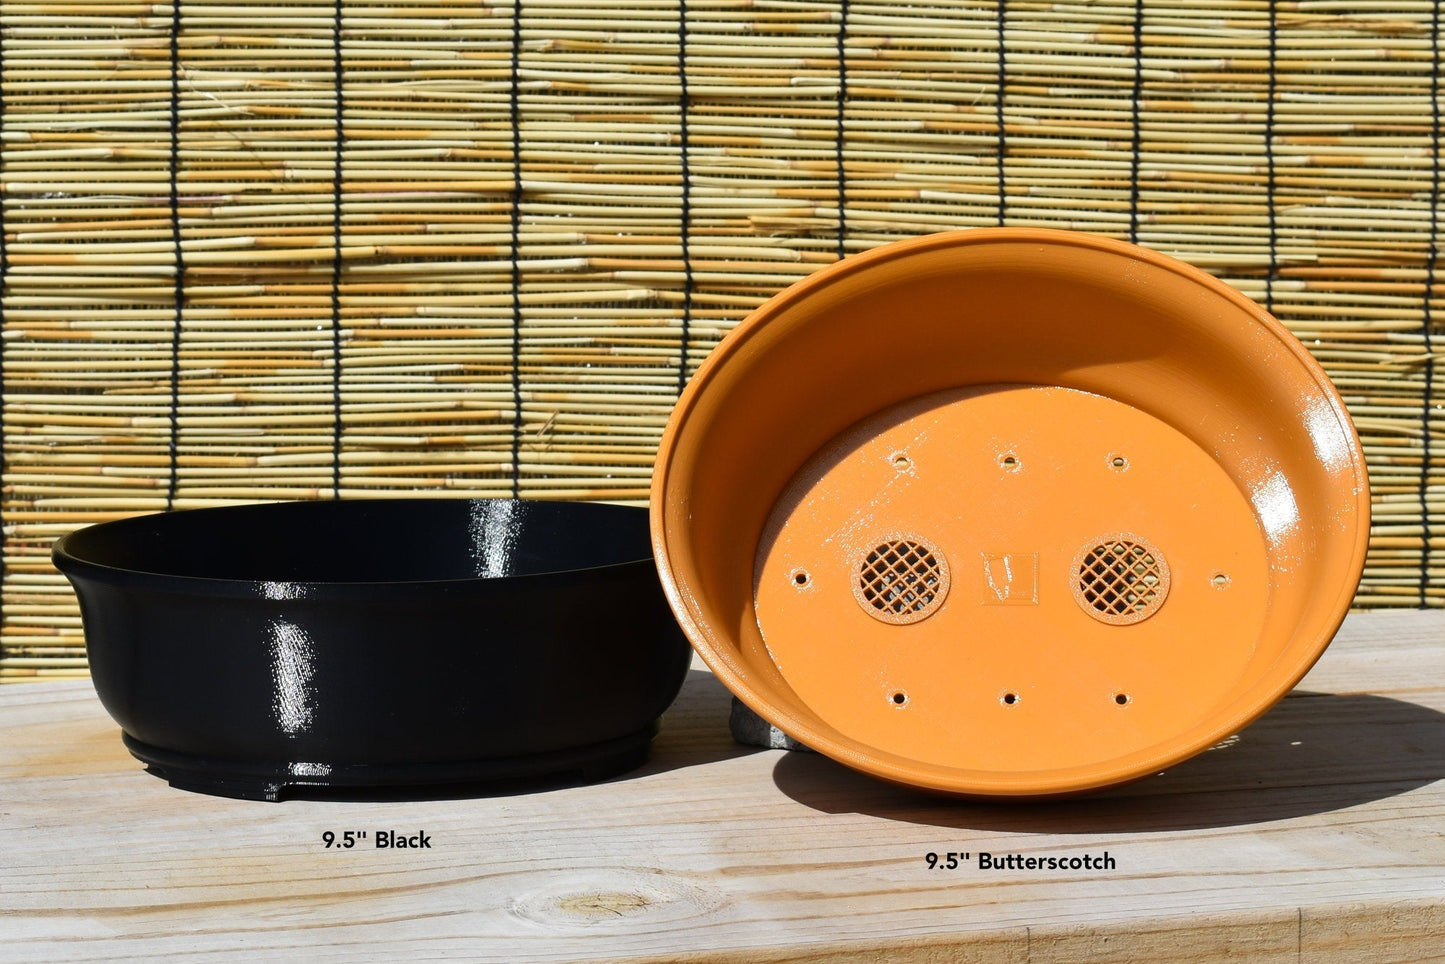 15-inch Oval Bonsai Pot